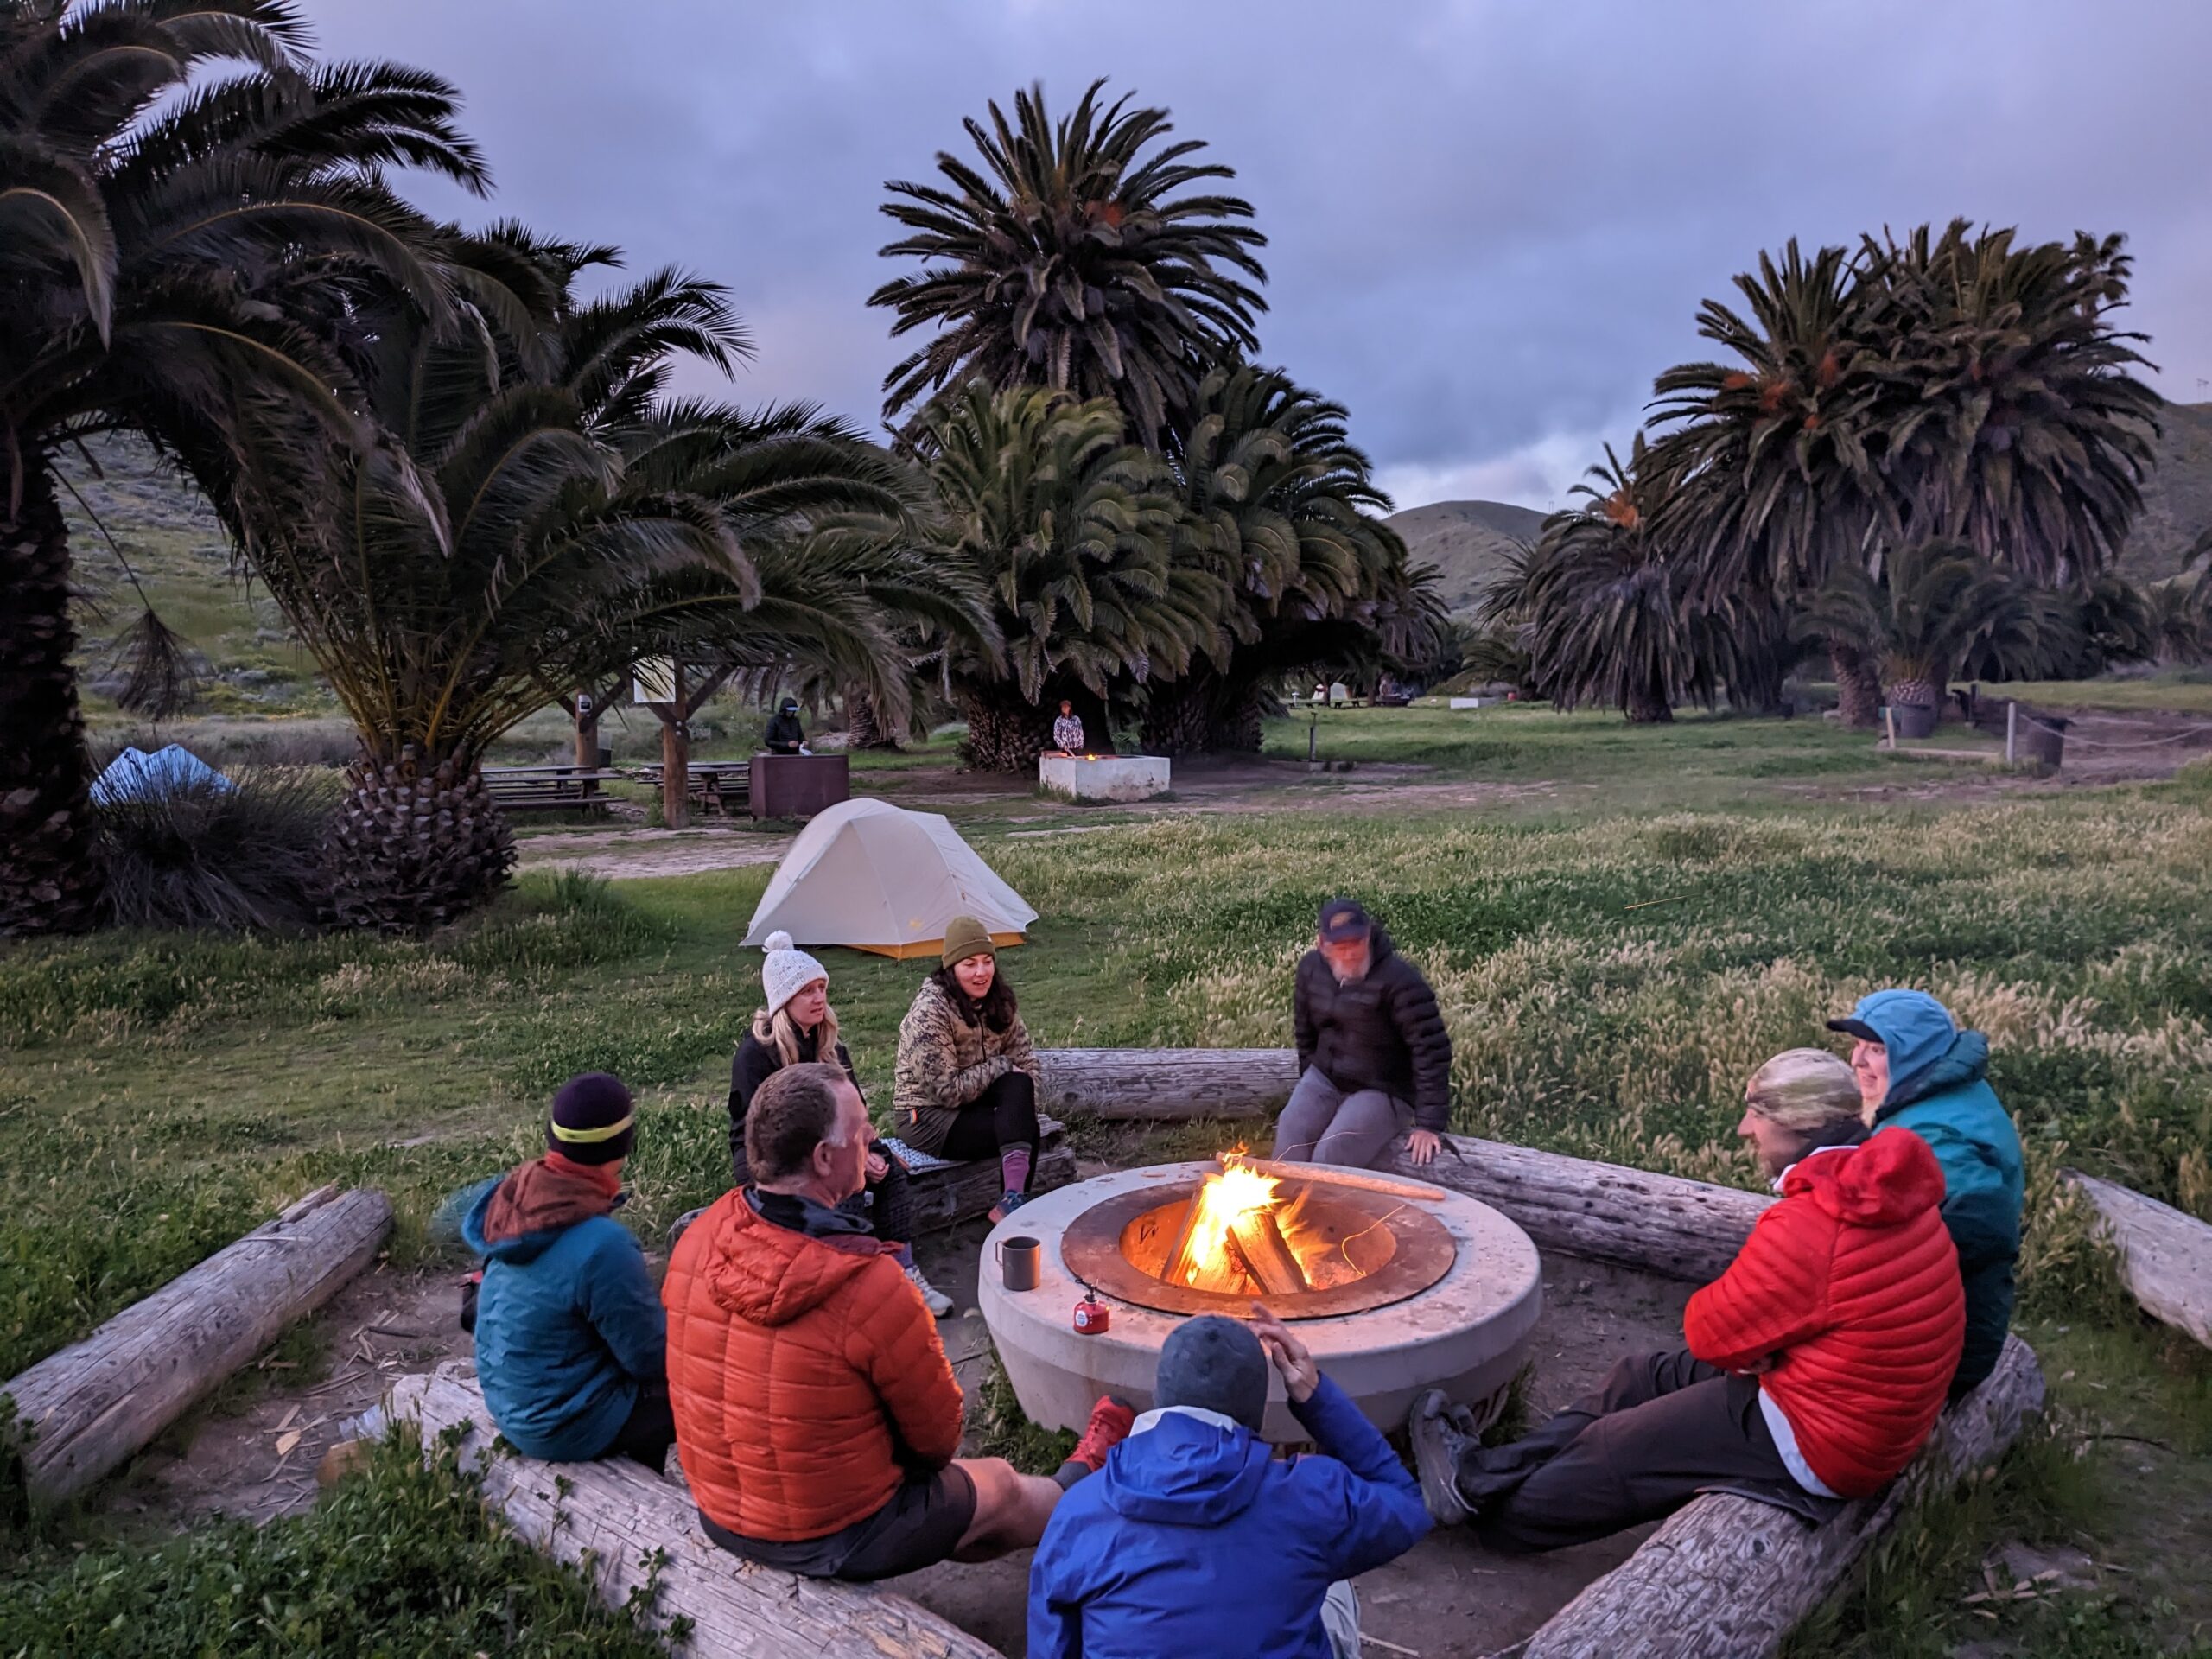 Thru-hikers meeting around a campfire